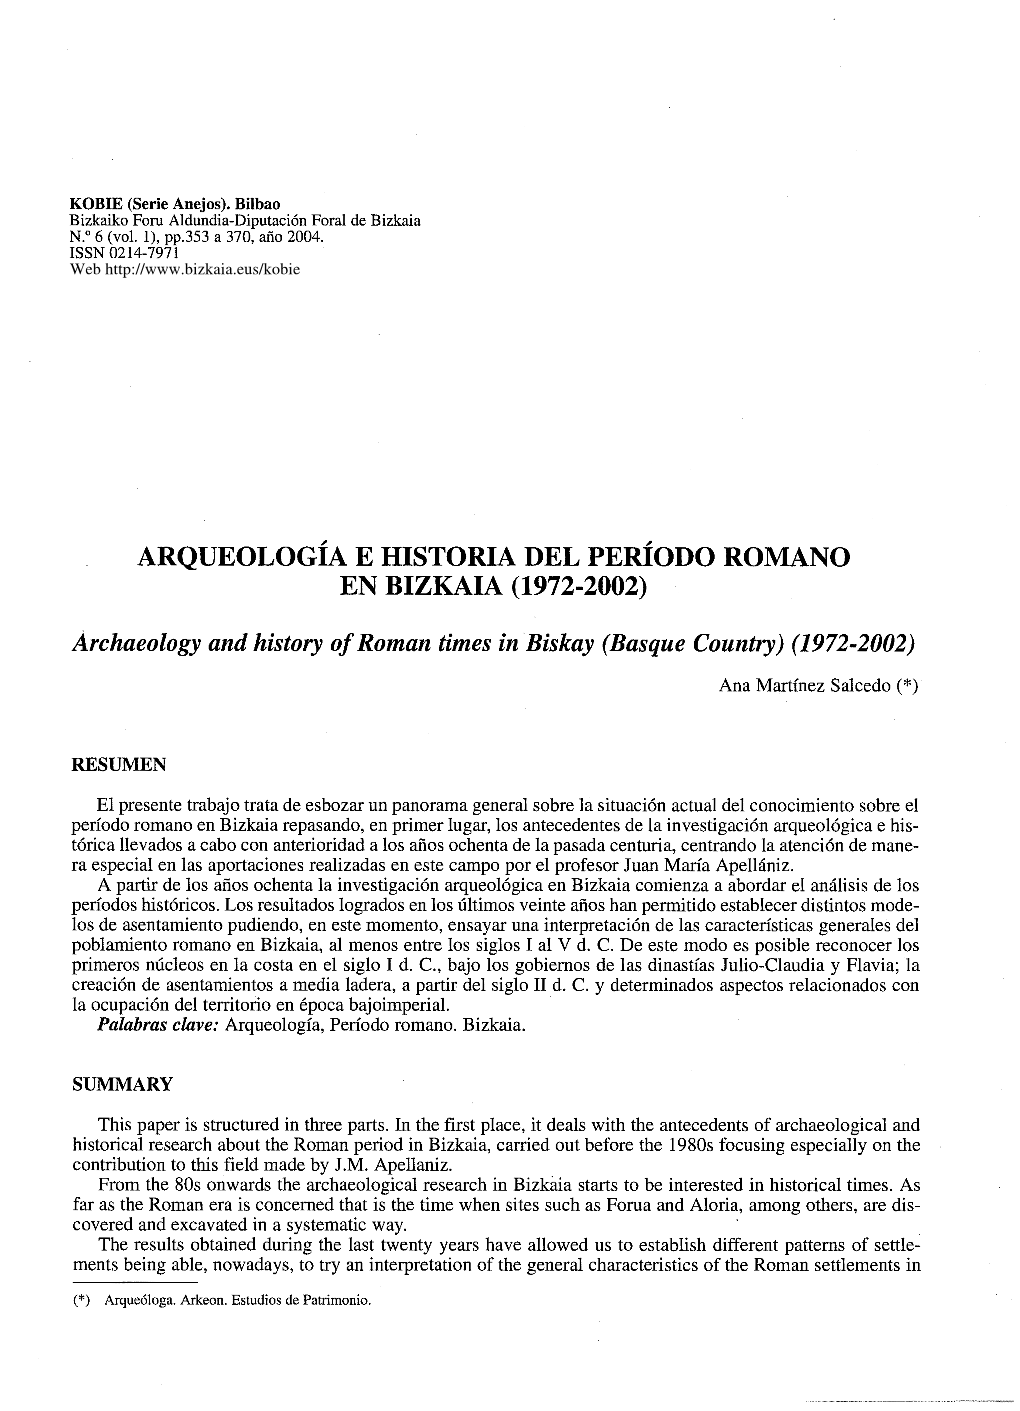 Arqueología E Historia Del Período Romano En Bizkaia (1972-2002)